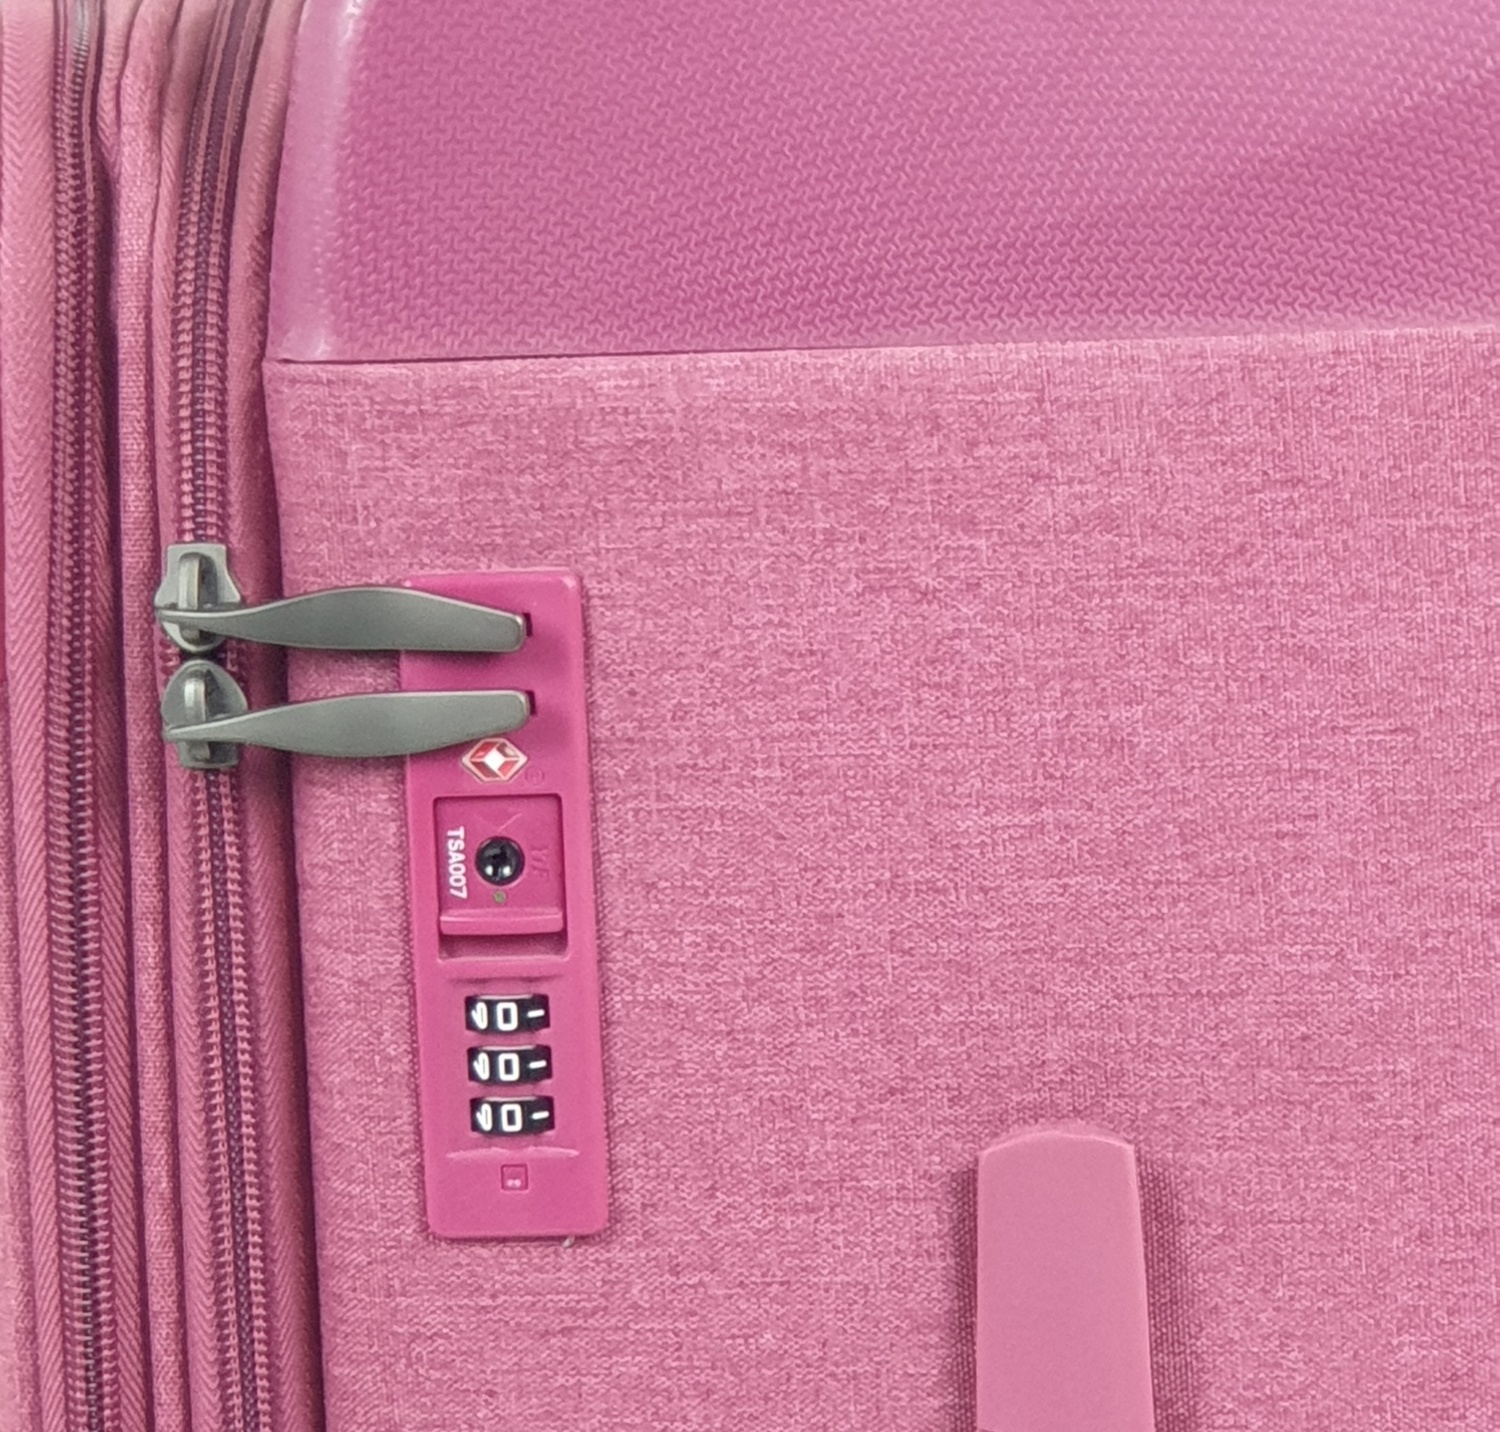 WETZLARS กระเป๋าเดินทางแบบผ้า รุ่น ATW001PK-2 ขนาด 24  สีชมพู